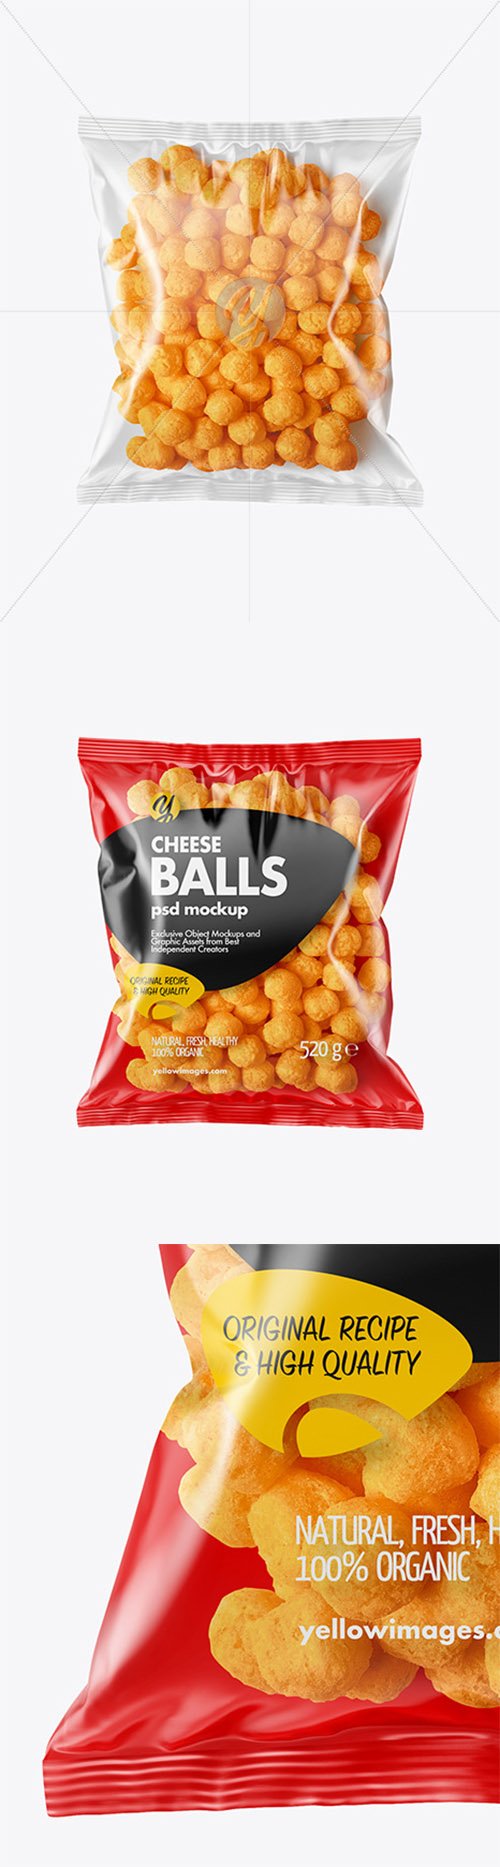 Plastic Bag With Cheese Balls Mockup 79795